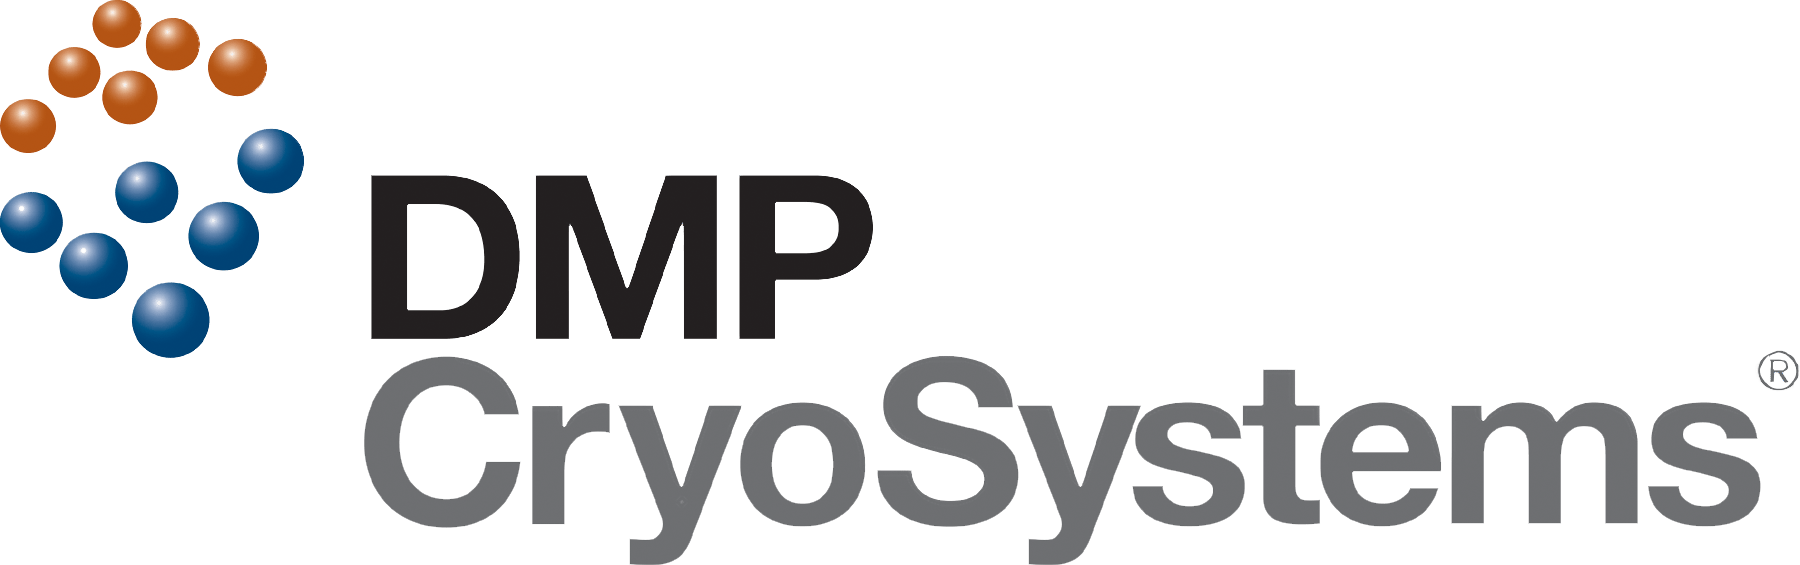 DMP Cryo Systems Logo